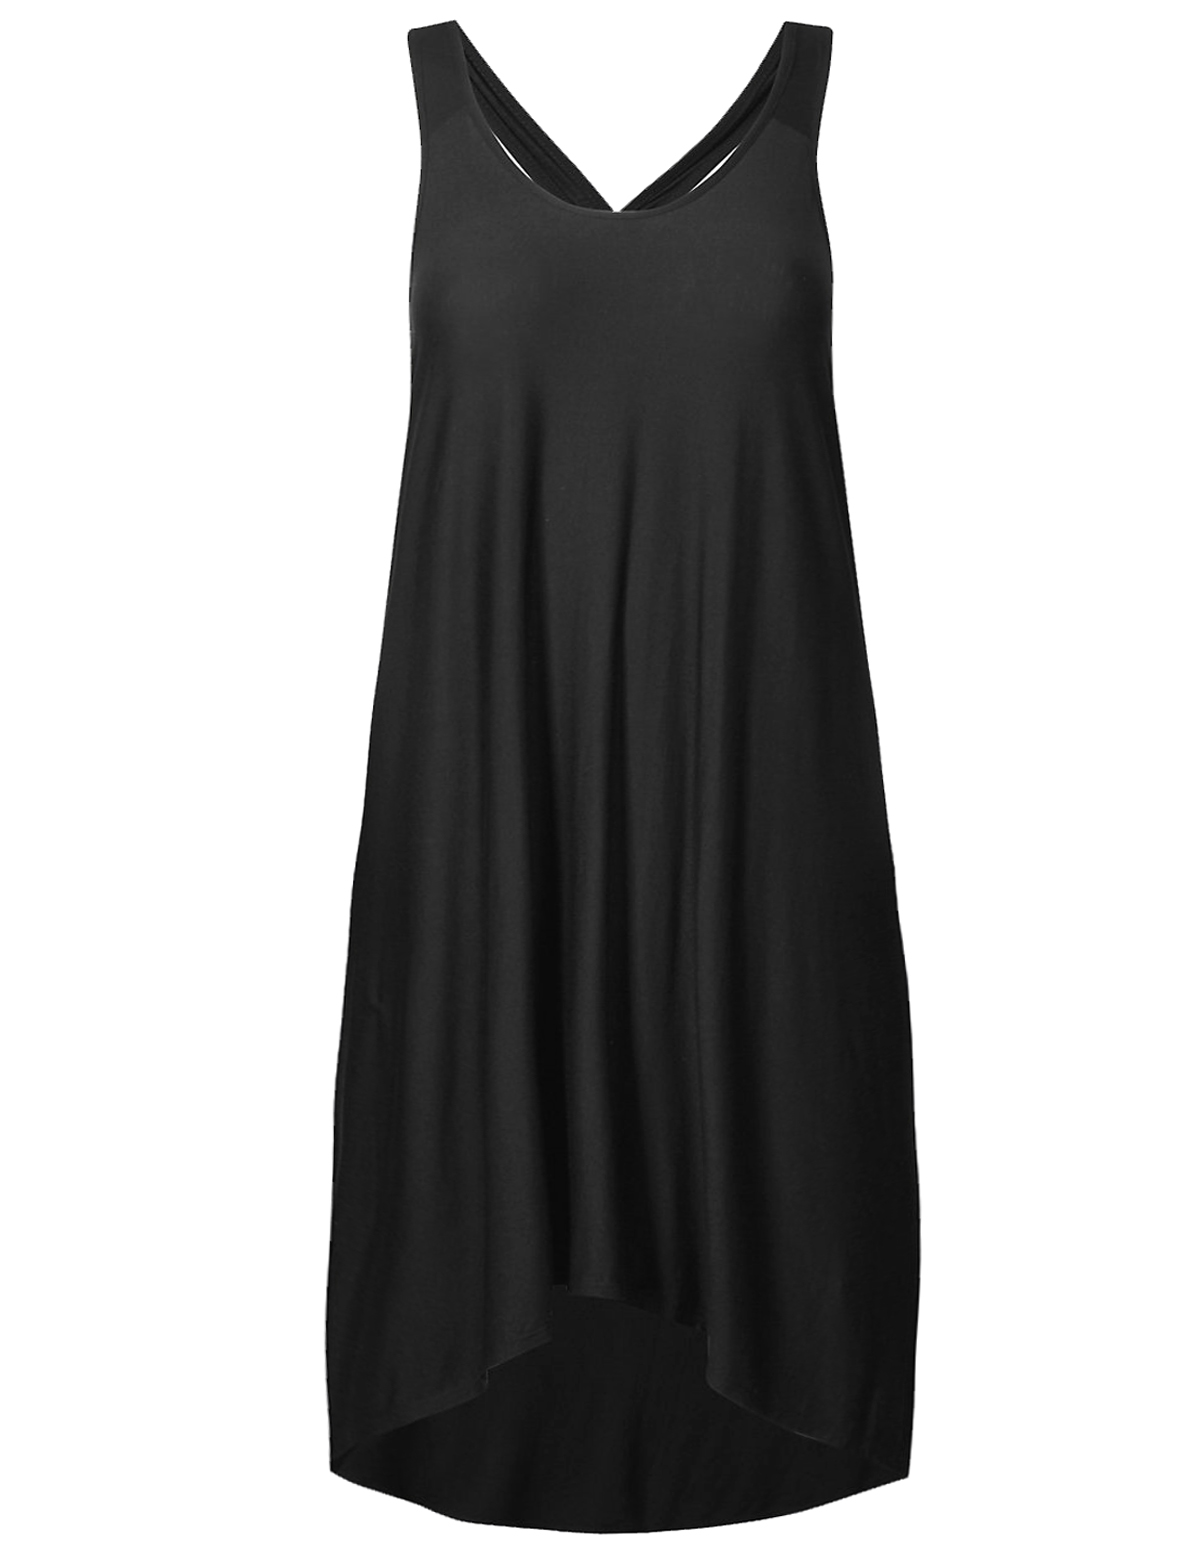 black dress with vest